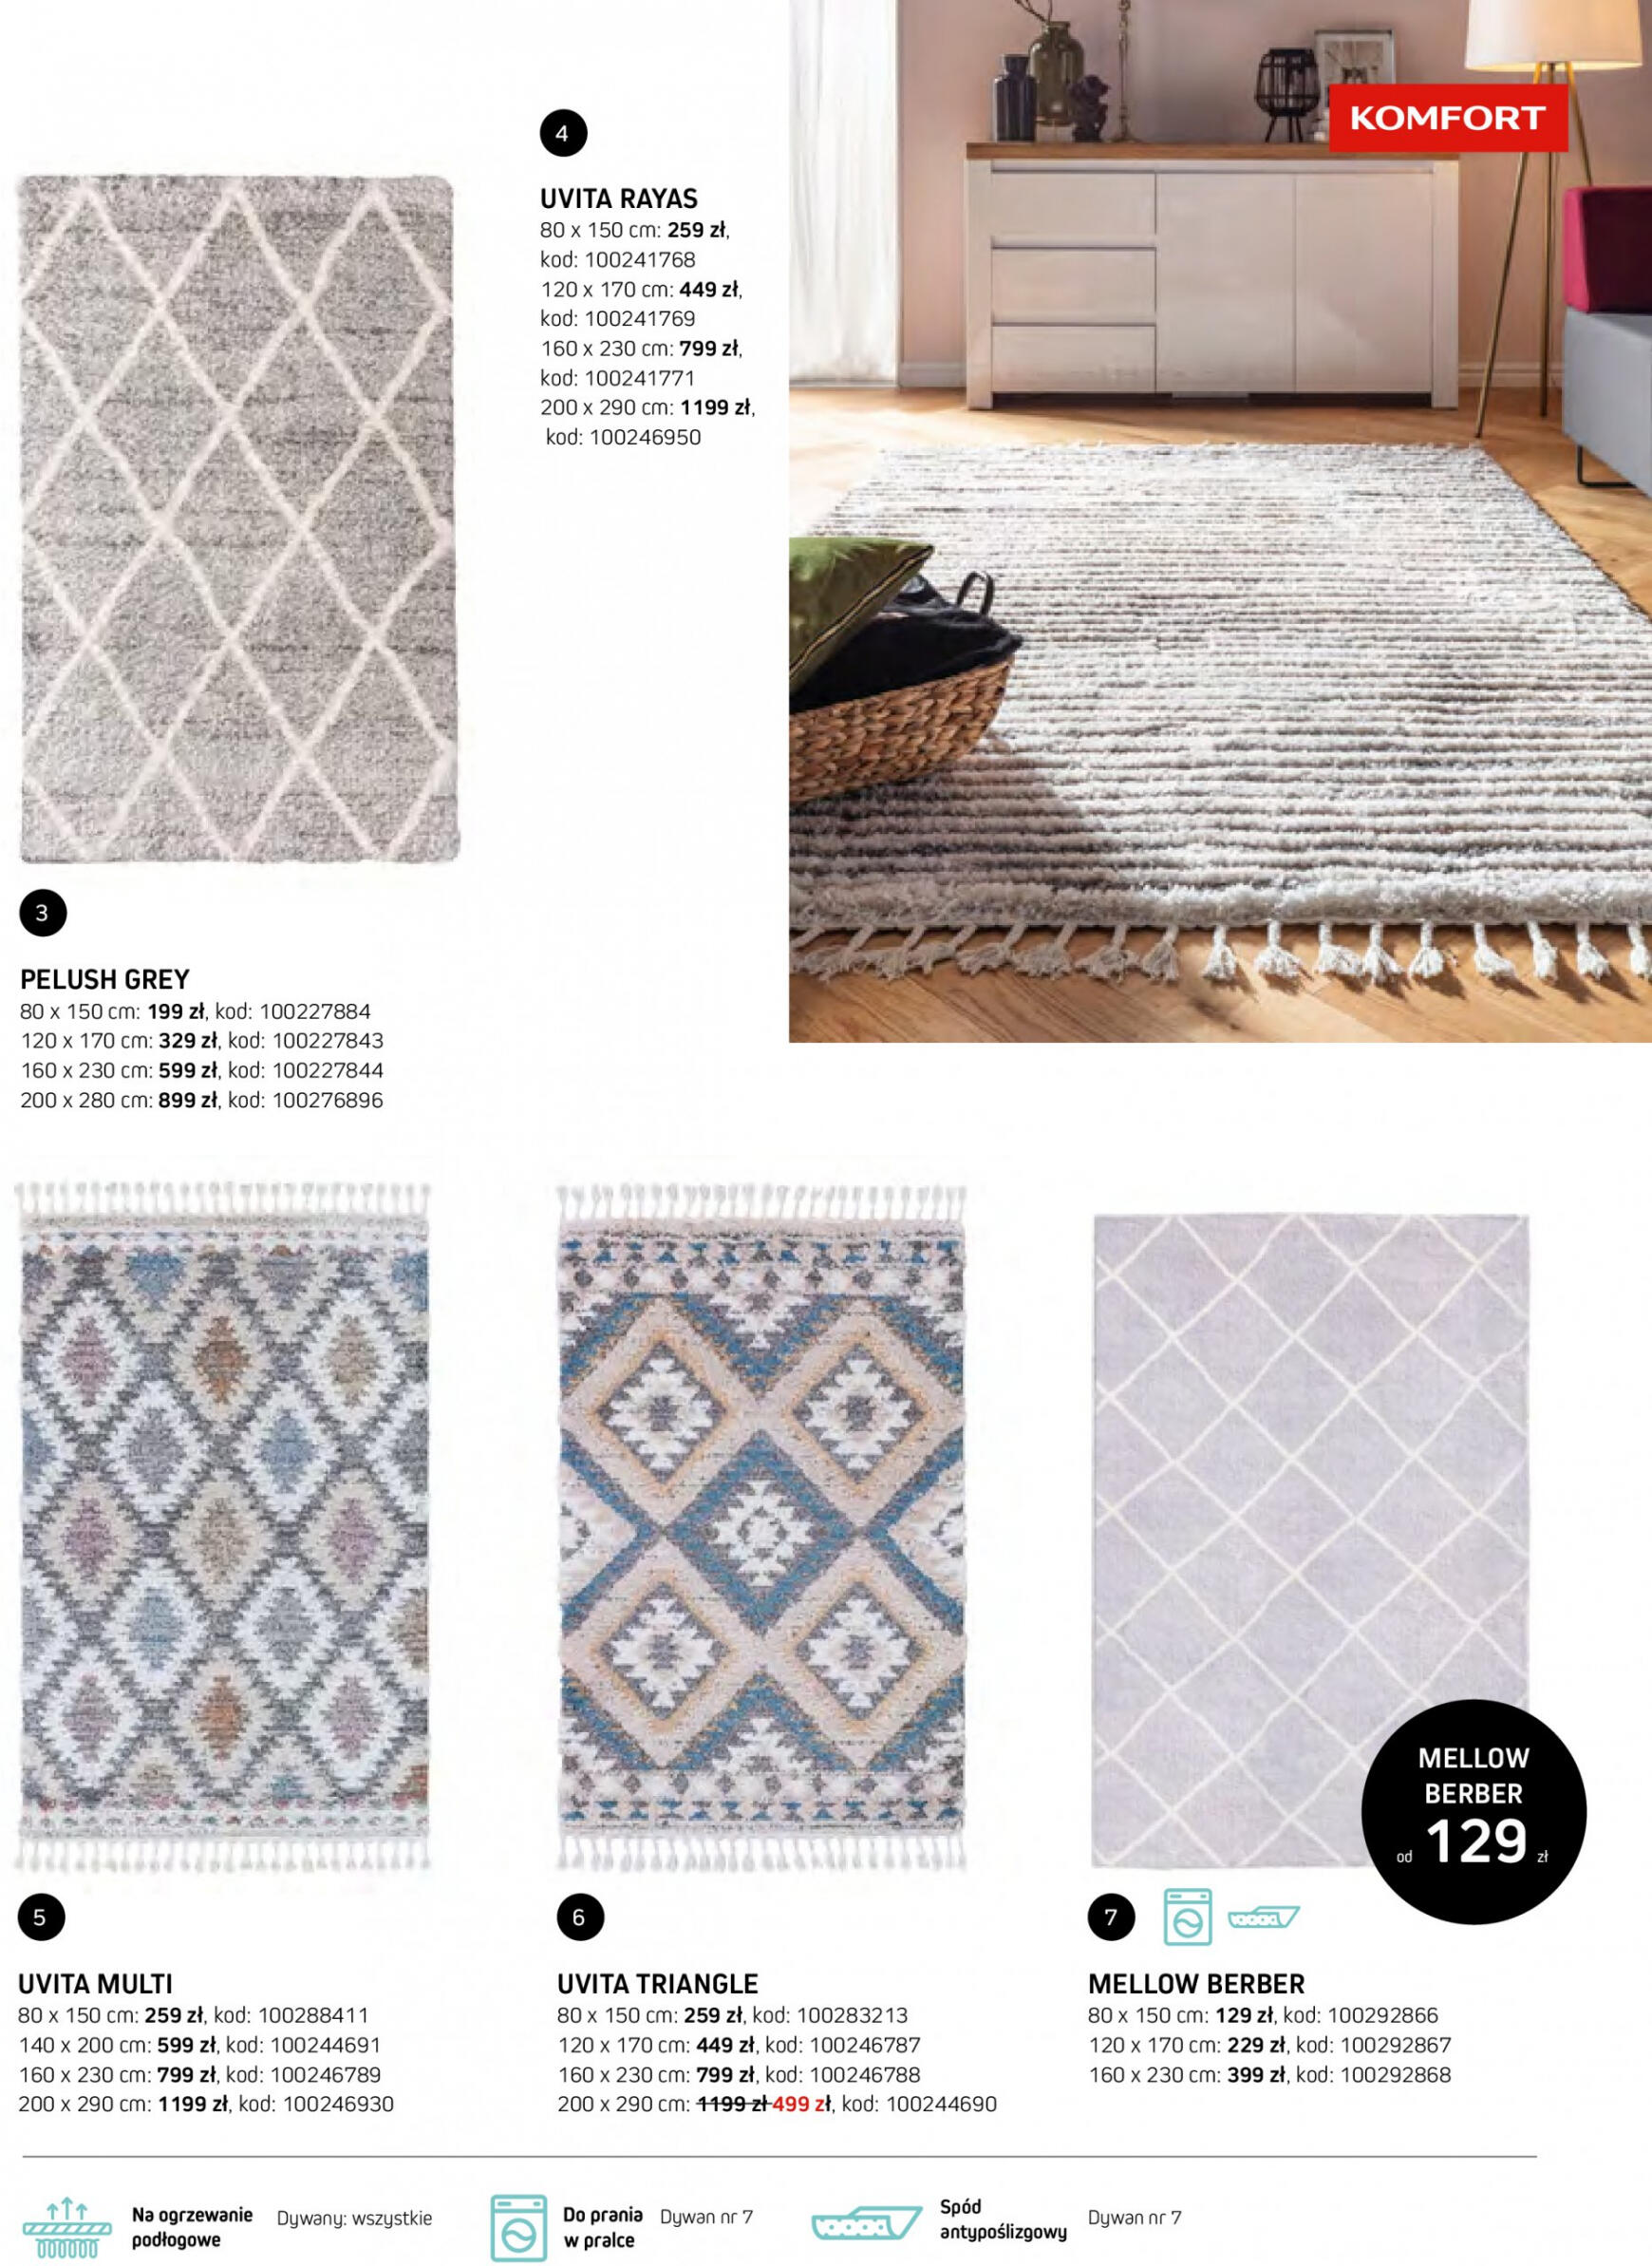 komfort - Komfort - Katalog dywany - page: 43